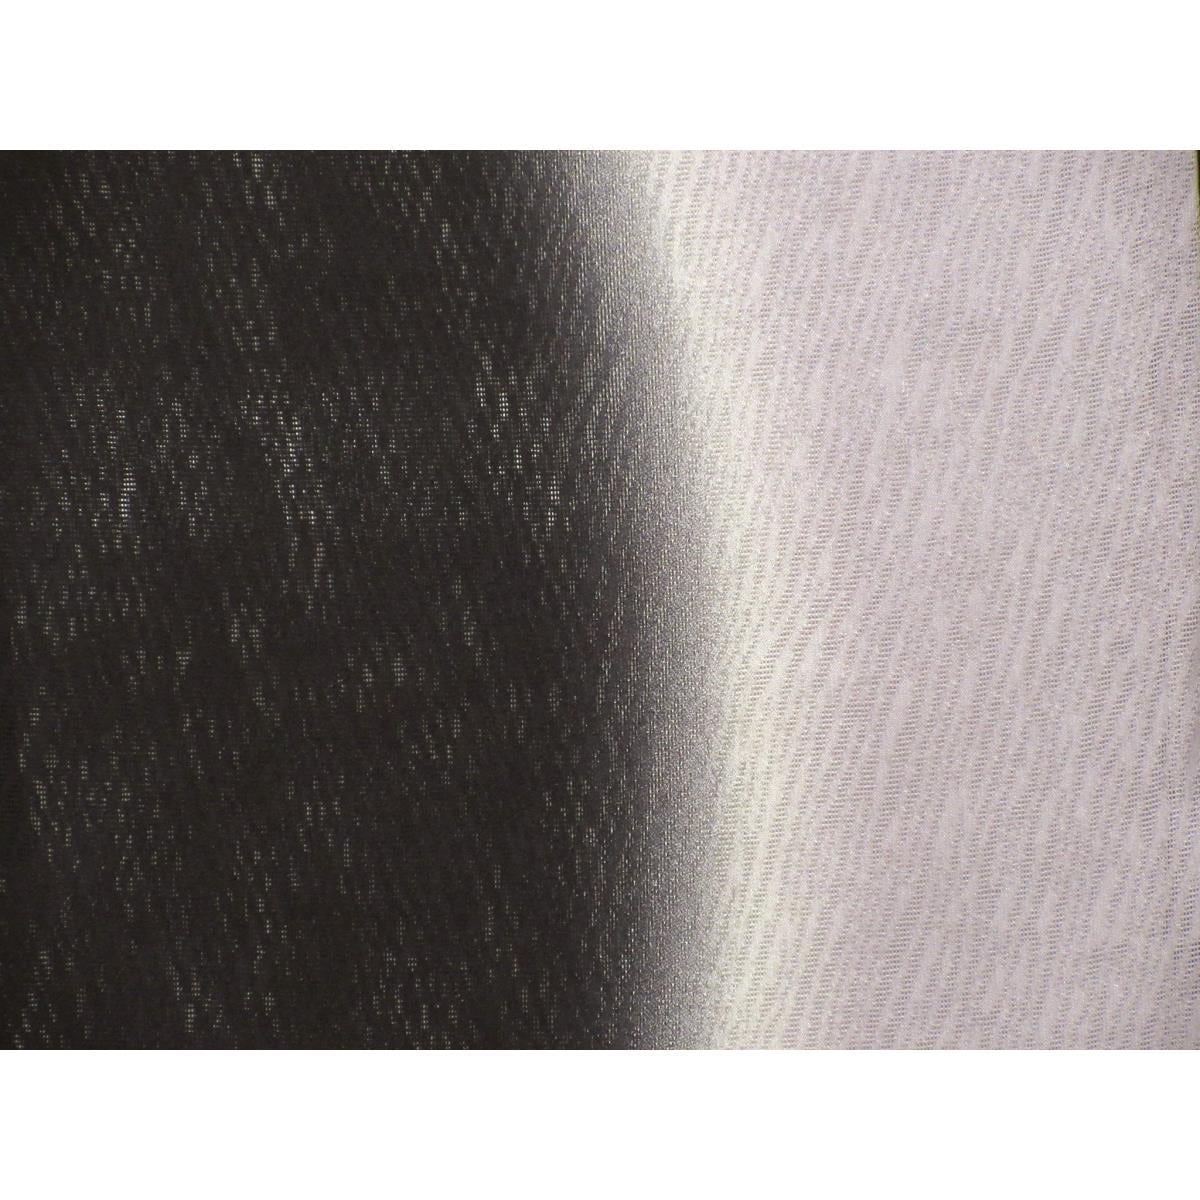 [Unused items] Haori, single layer, monshaori, gradation dye, semi-long